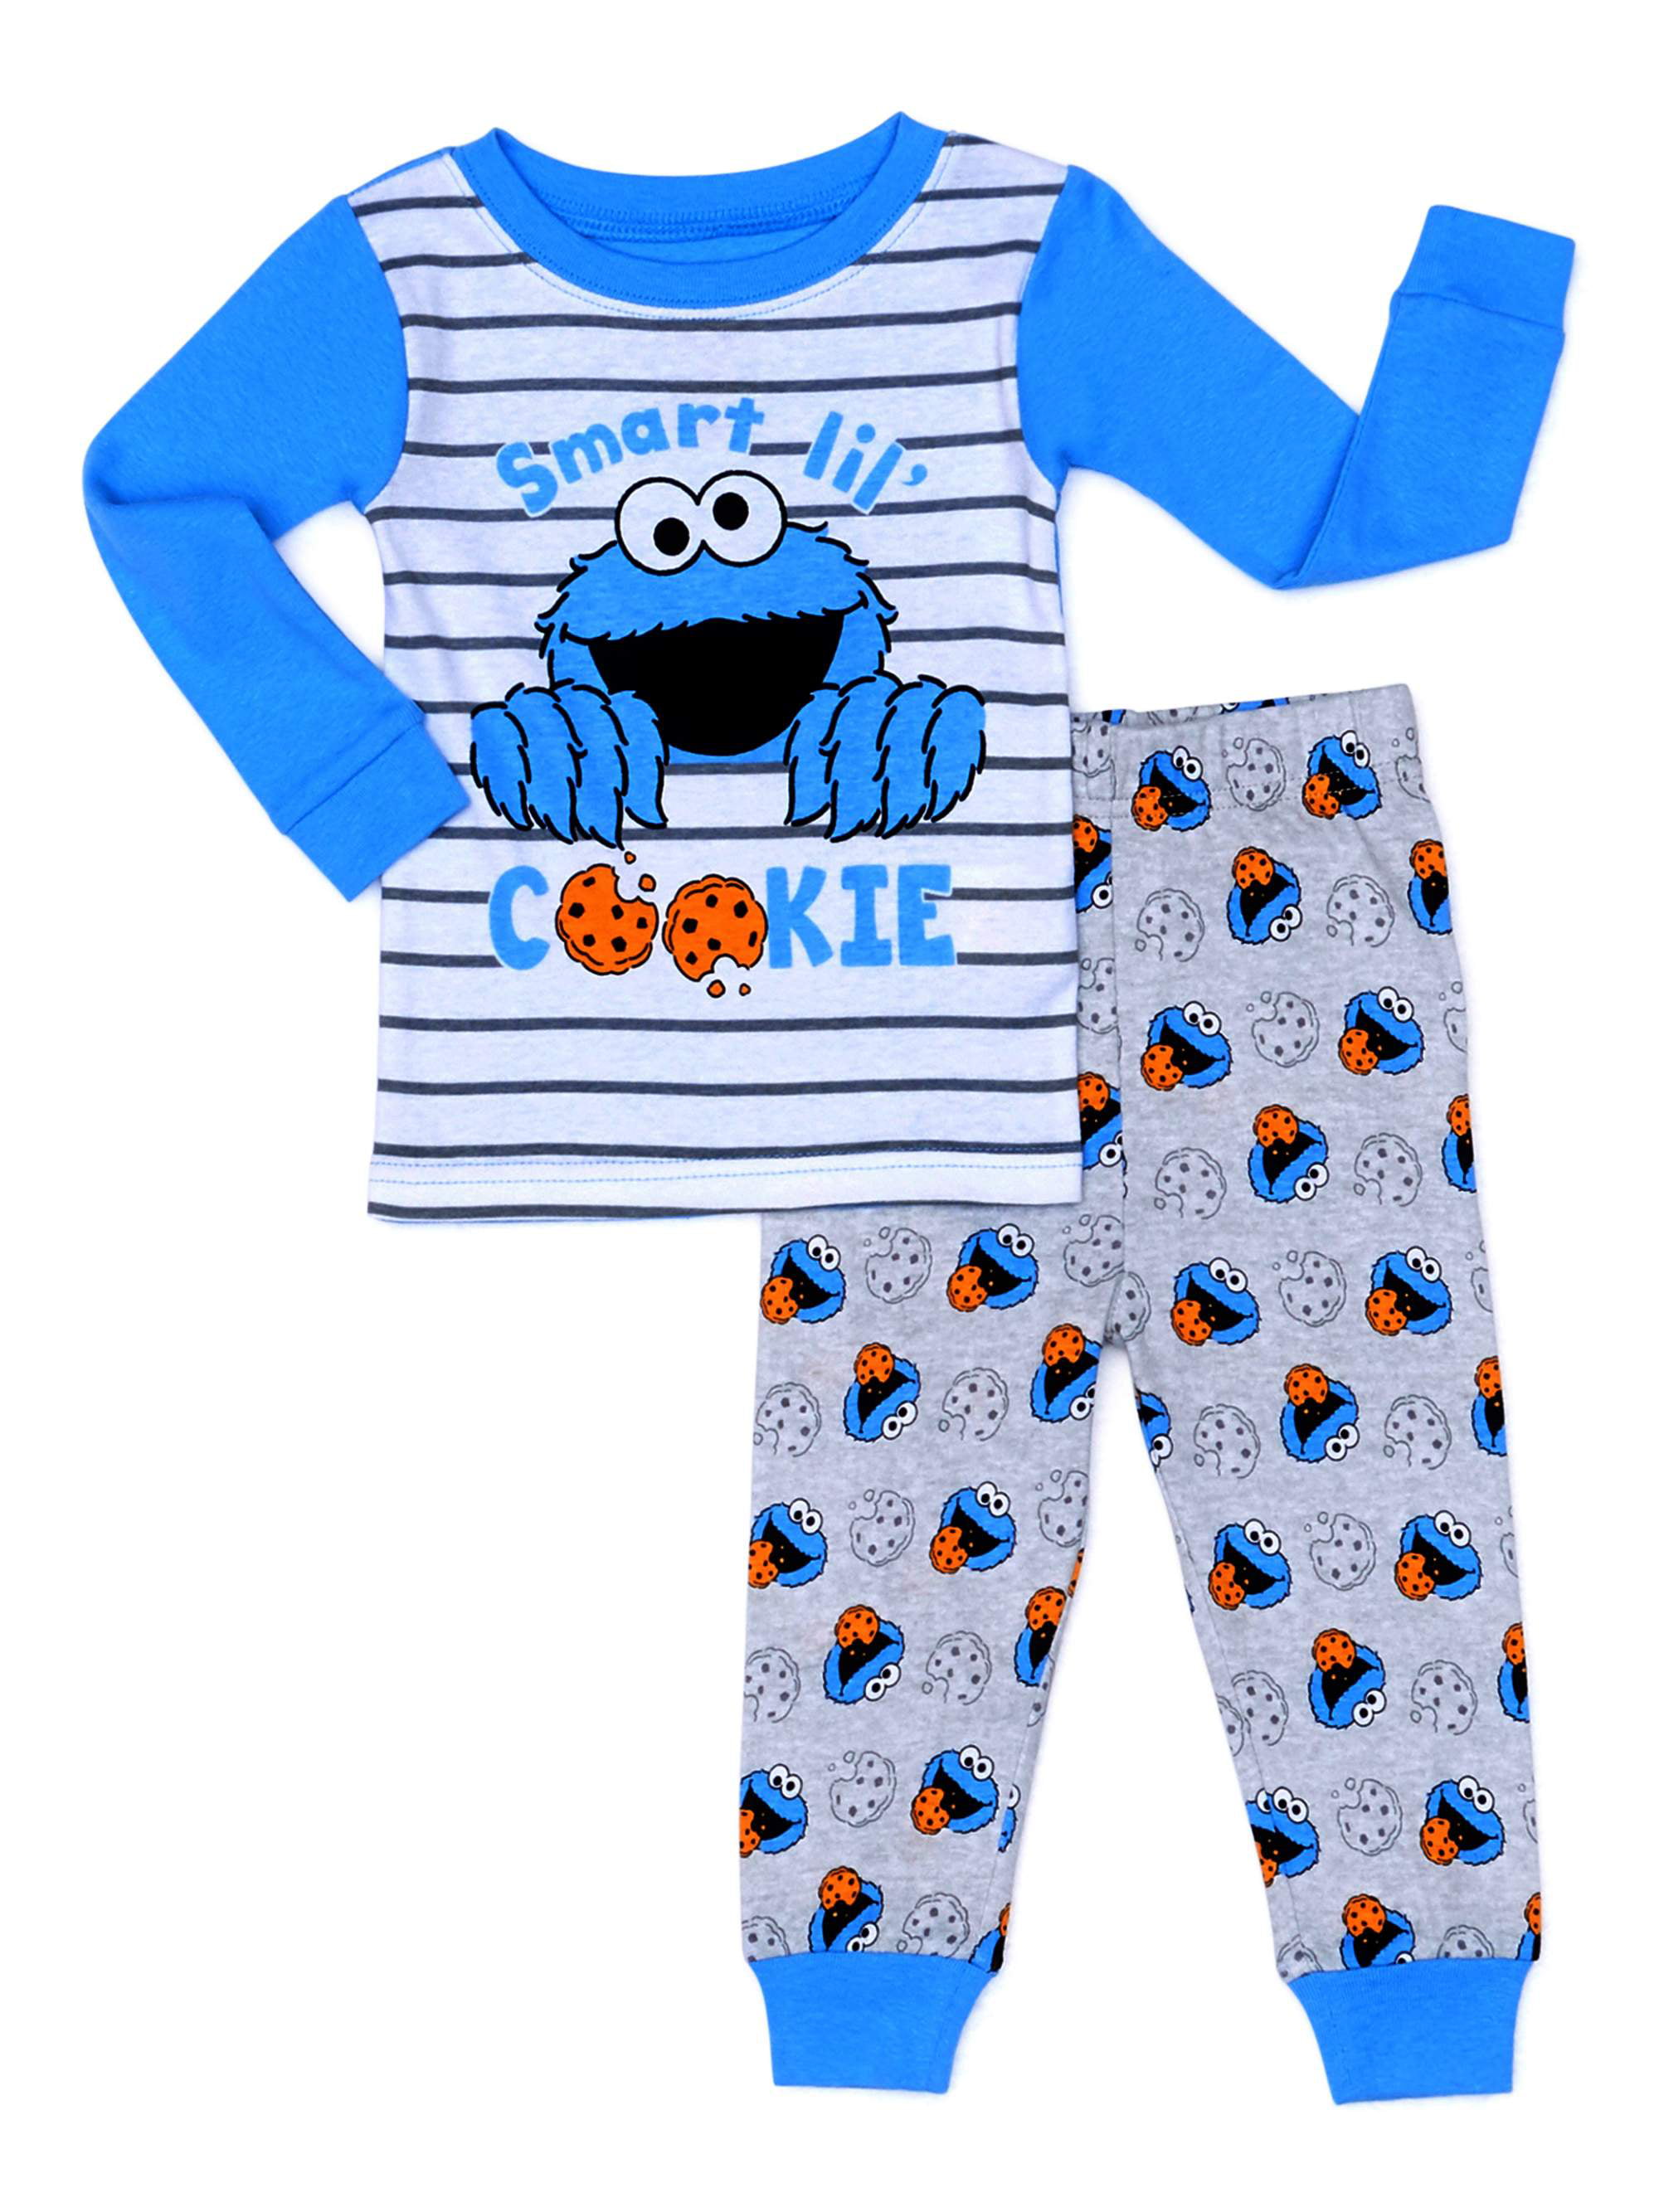 Boys Baby Cocomelon Pyjamas Bus Character Nightwear 12 Months 4 Years 